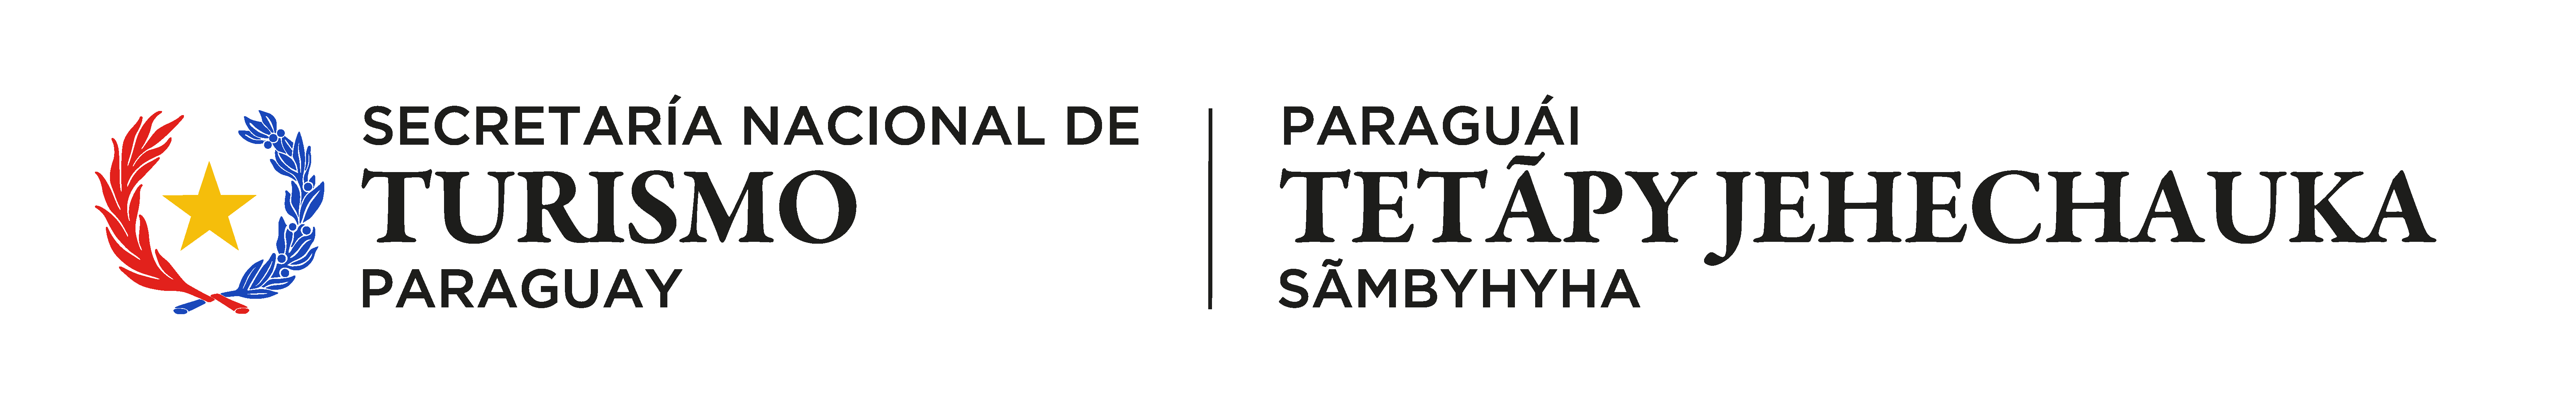 Senatur logo header